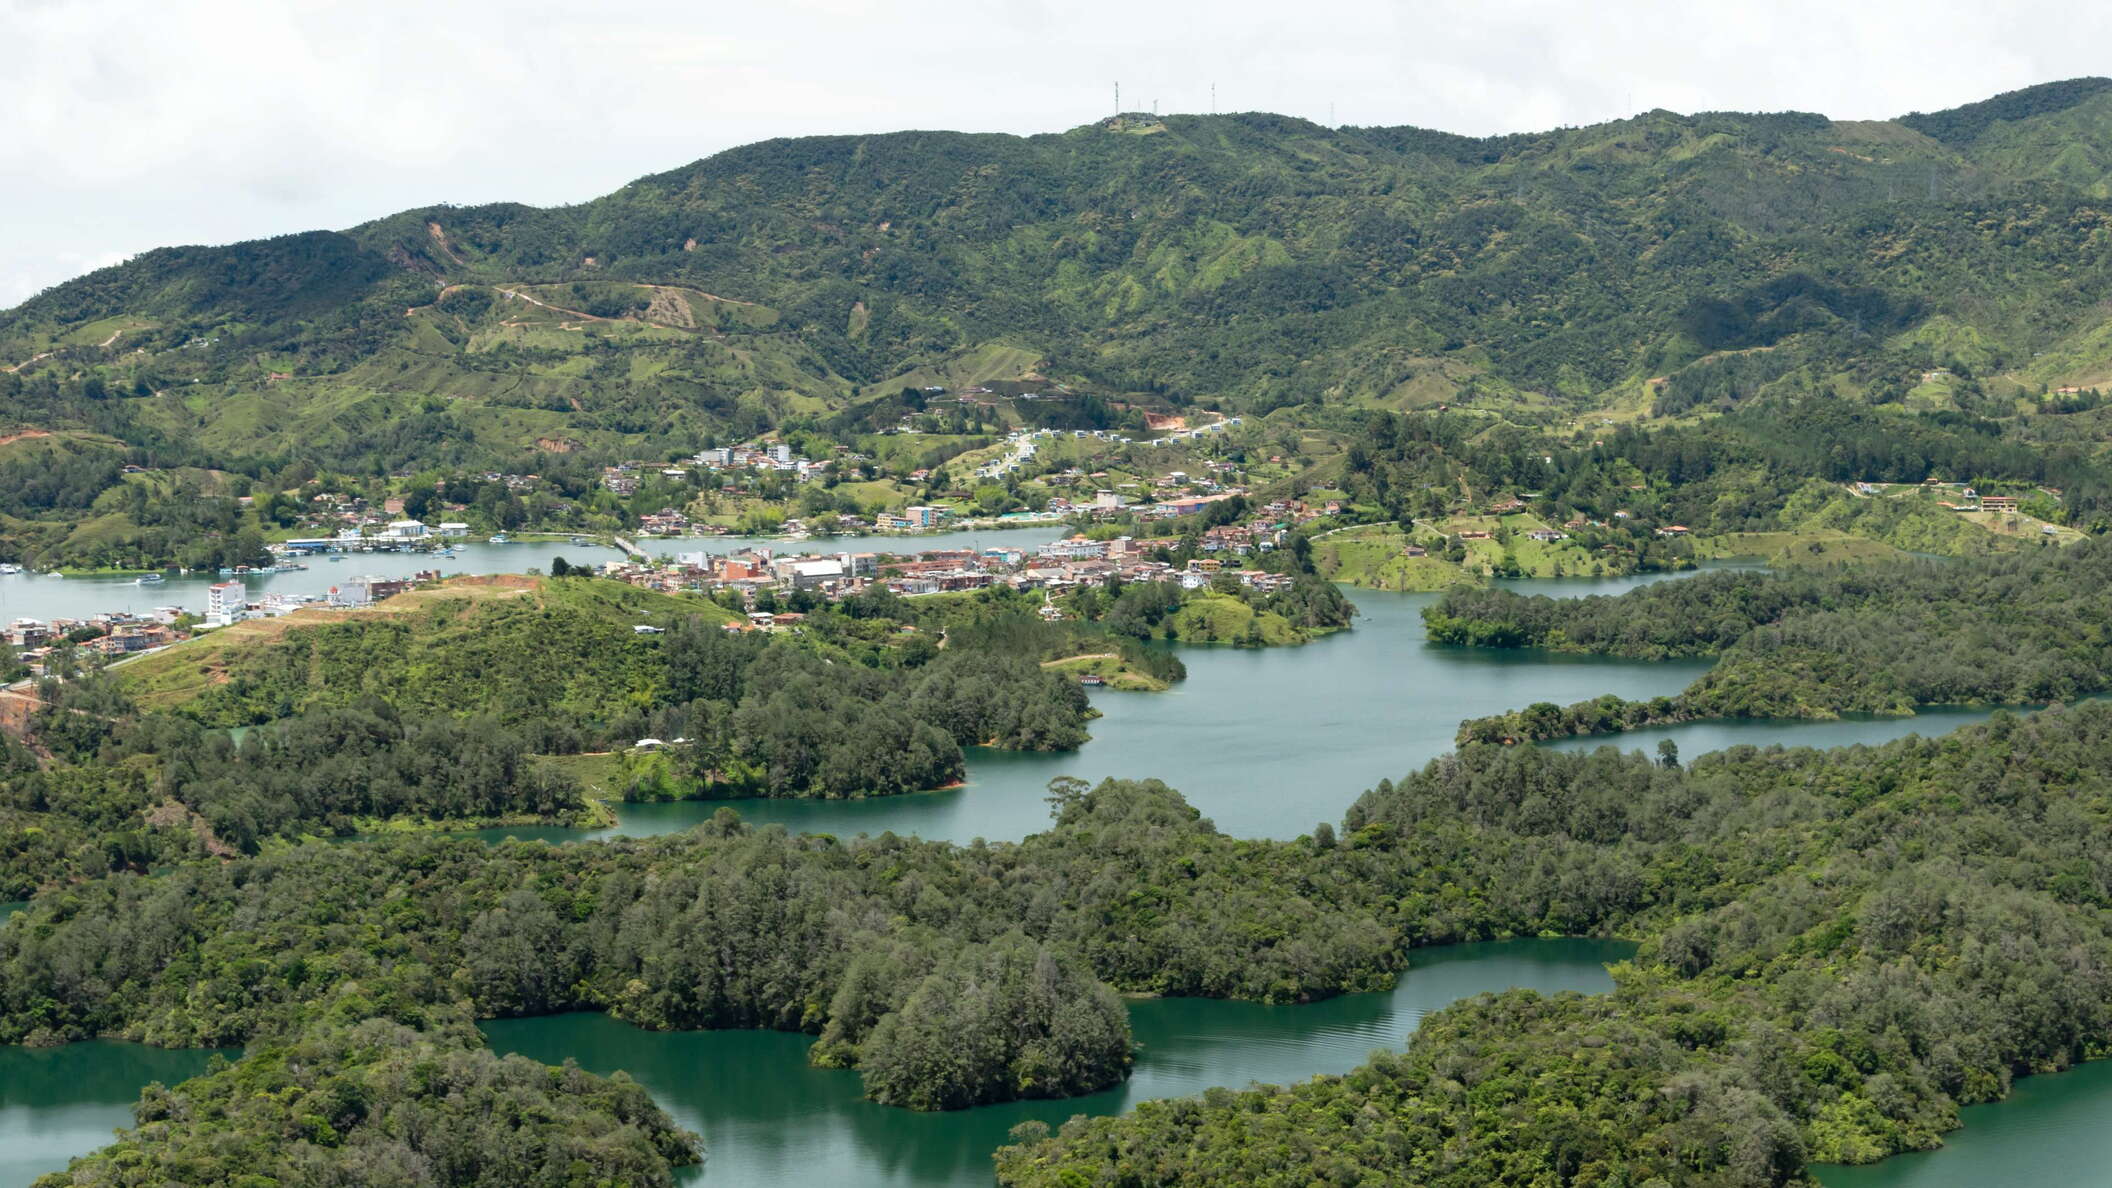 Eastern highlands of Antioquia with Guatapé